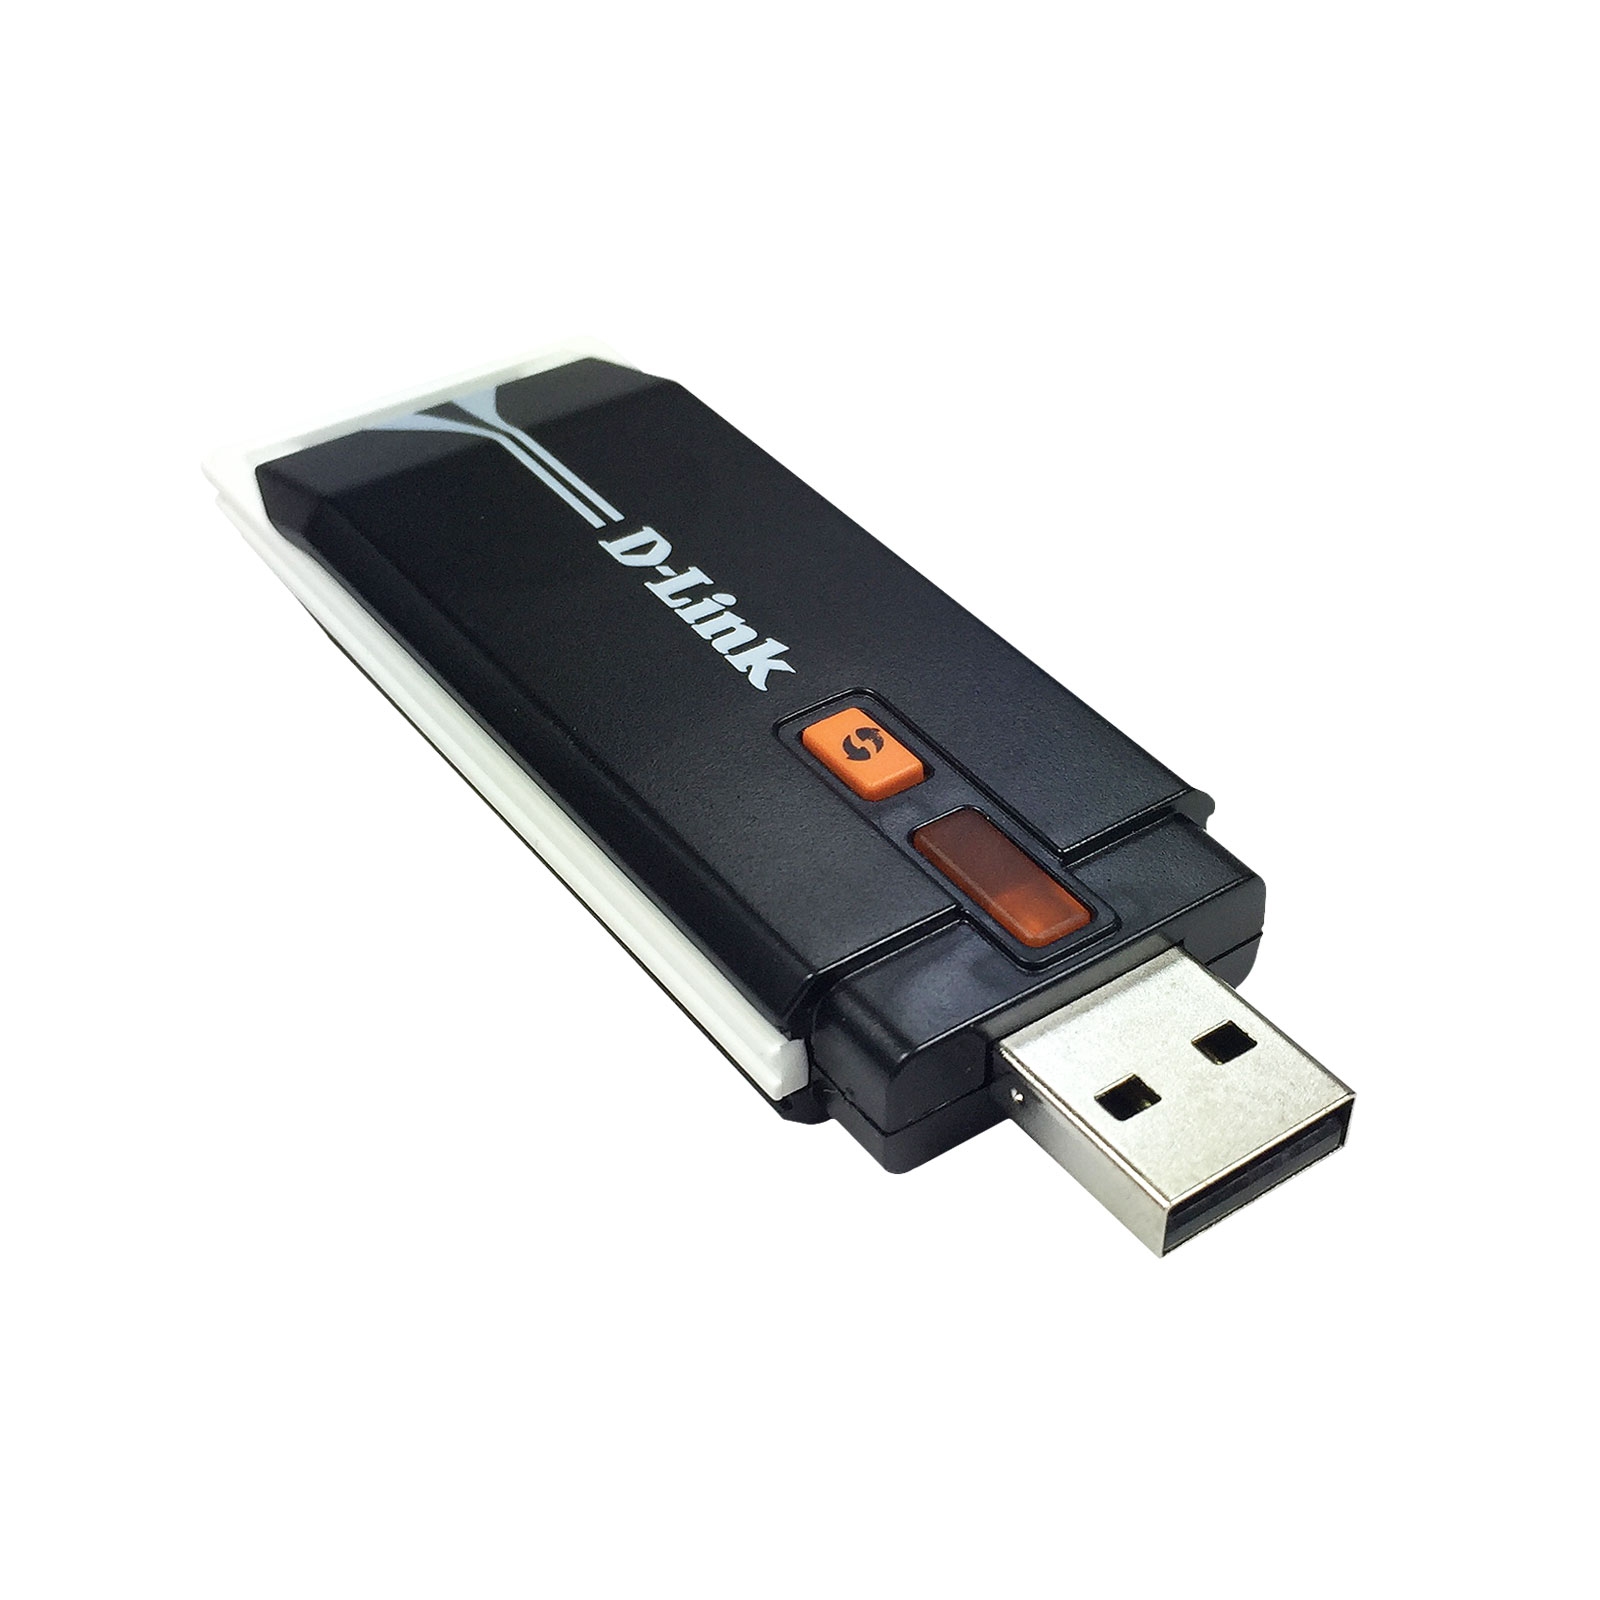 DLink DWA140 / De 300MBit Wifi Stick USB 2.0 Wireless PC WLAN Adapter Dlink eBay